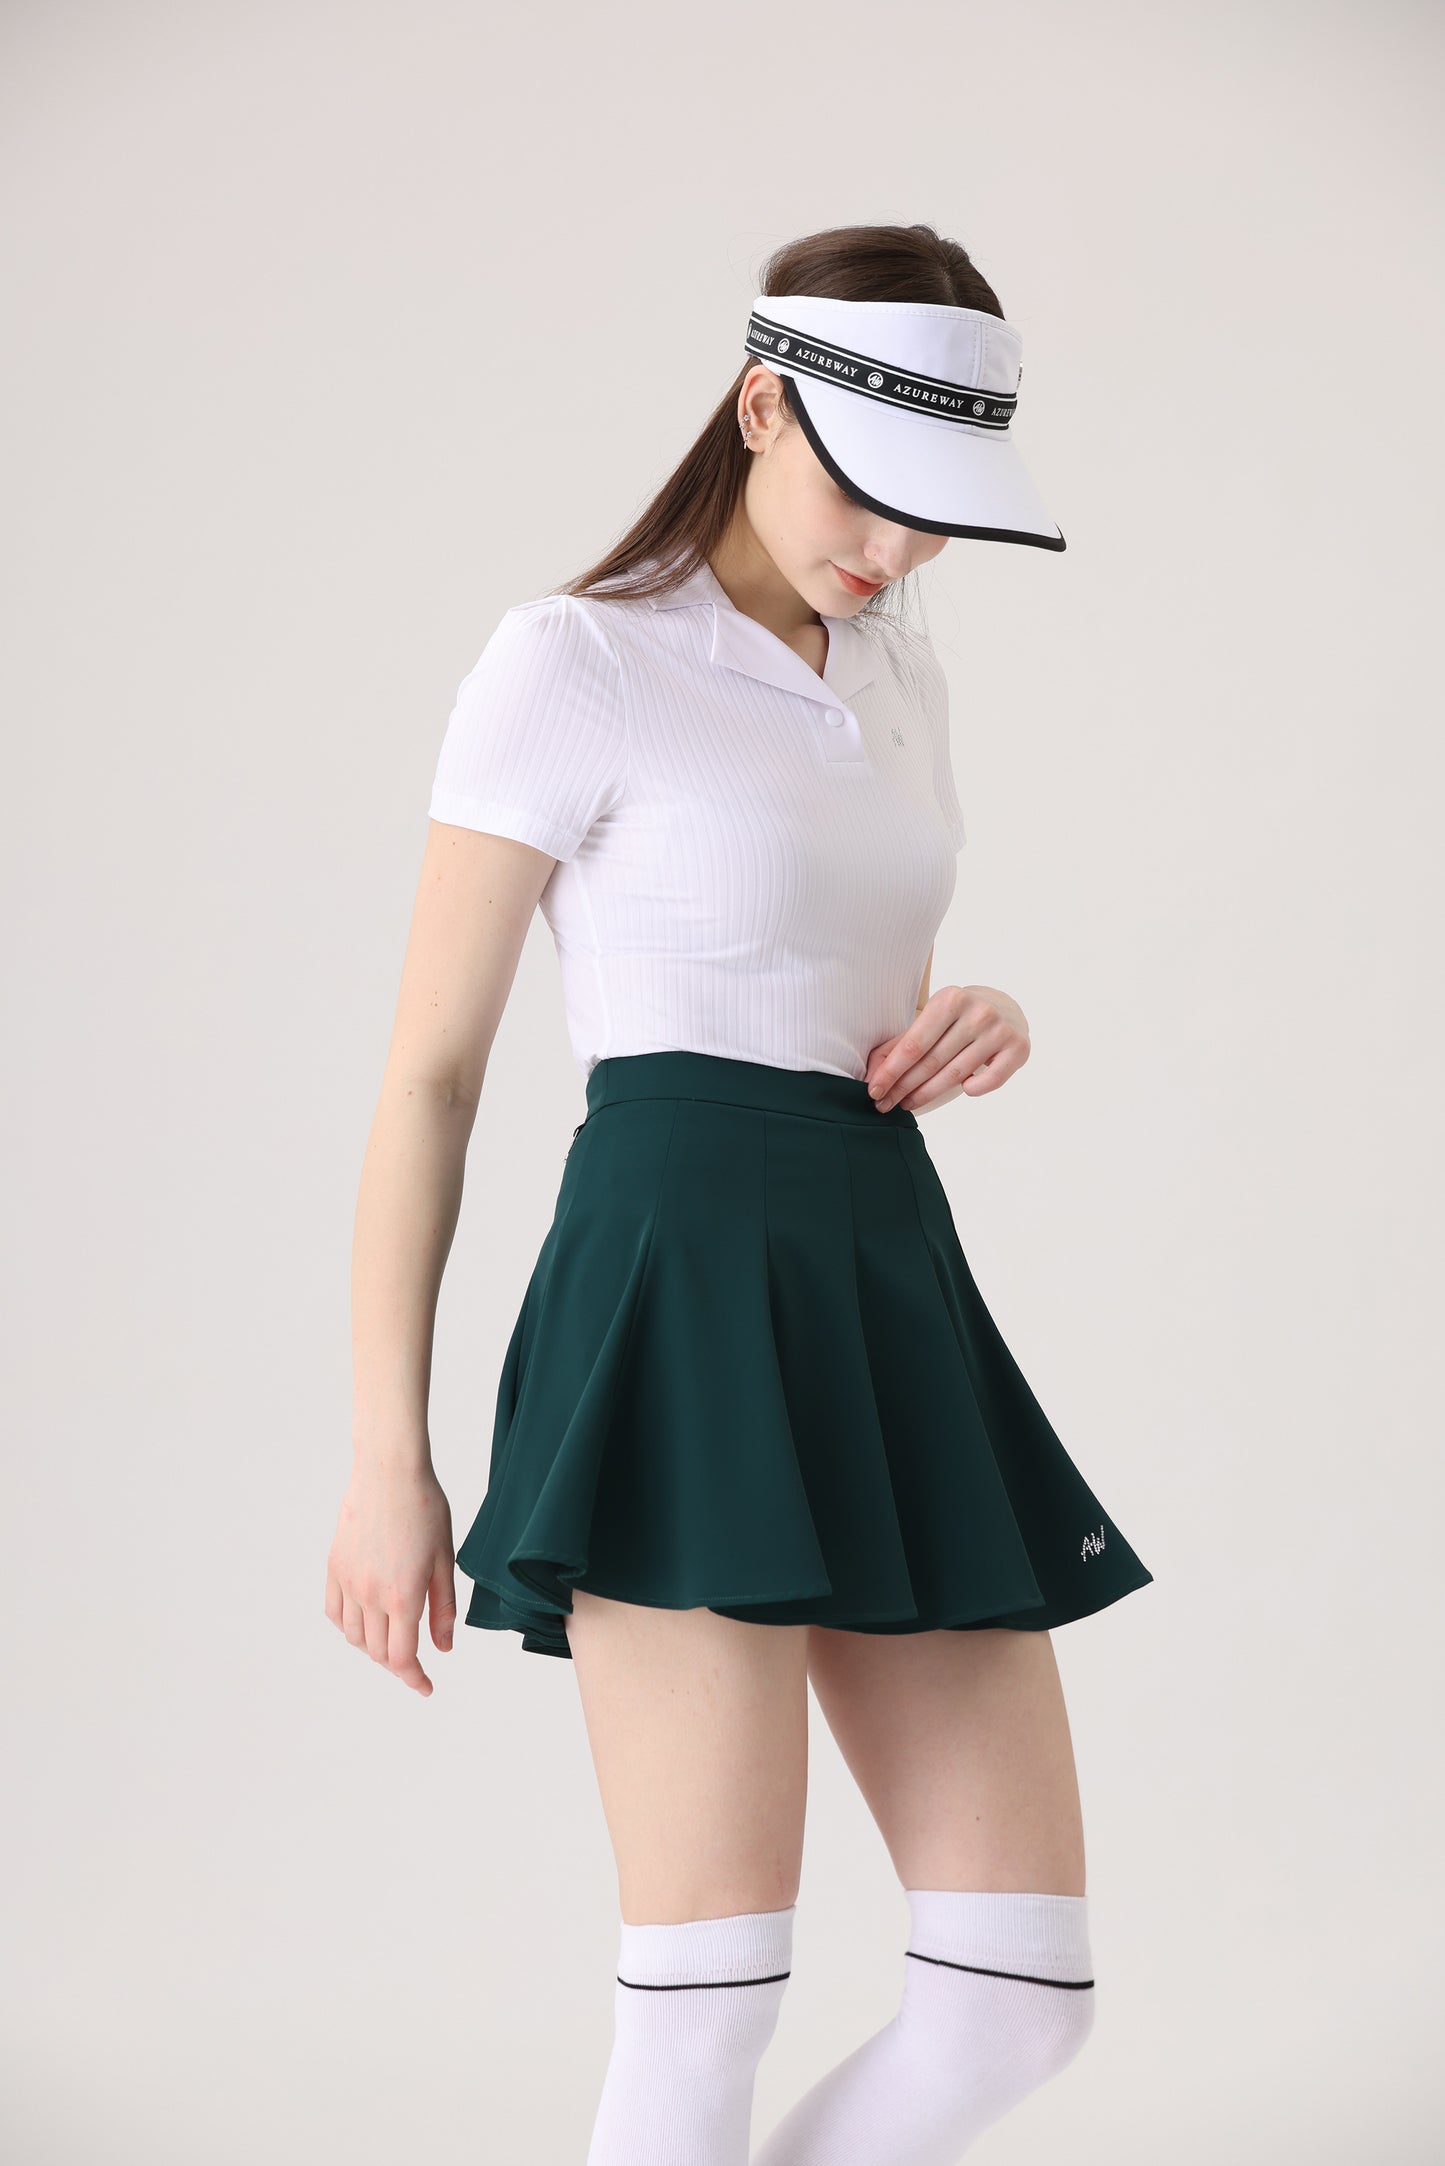 Azureway Summer Ladies Golf Shirt AW-T4113